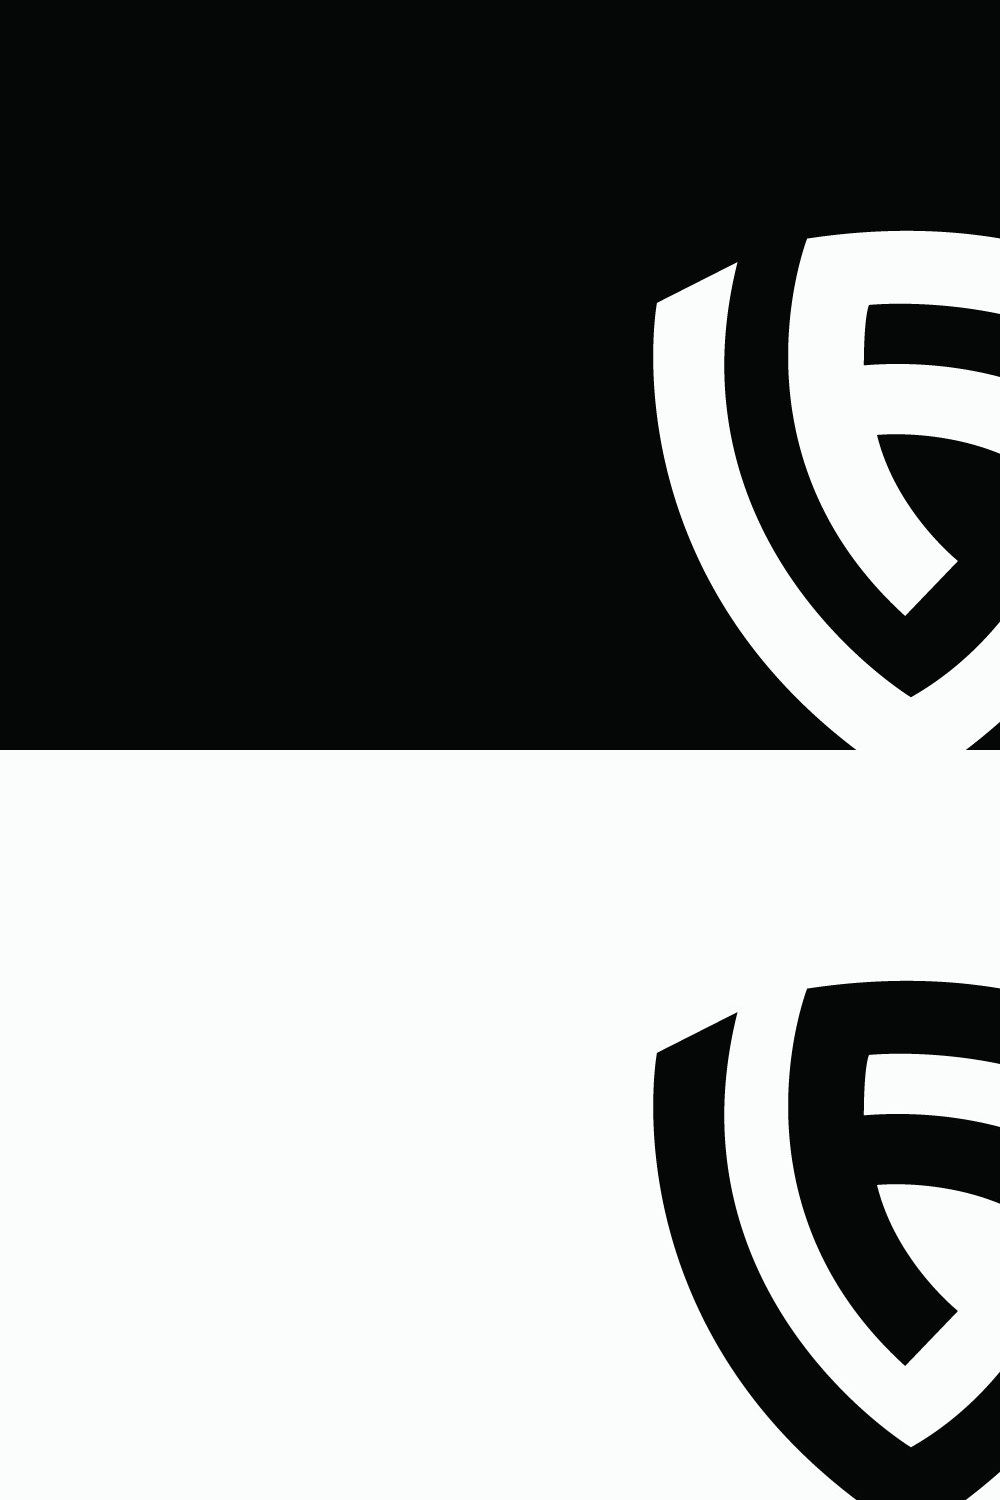 LF Letter Logo pinterest preview image.